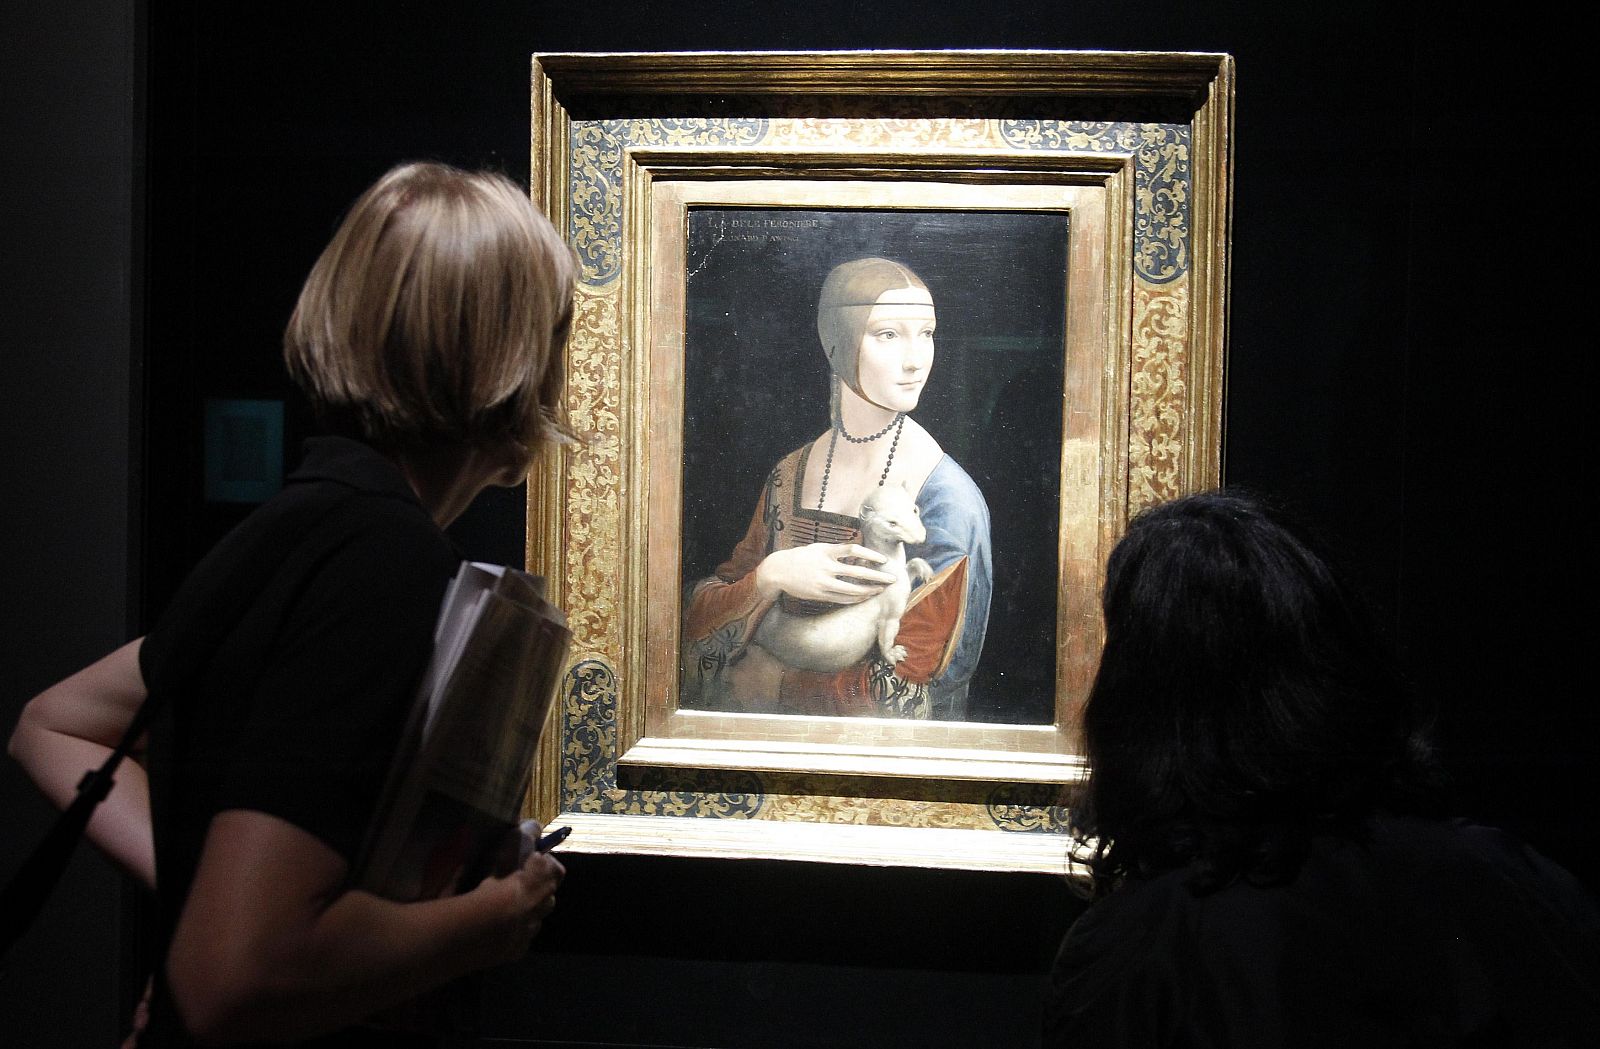 Journalists look at painting "Dame mit dem Hermelin" by Leonardo da Vinci at Bode museum in Berlin